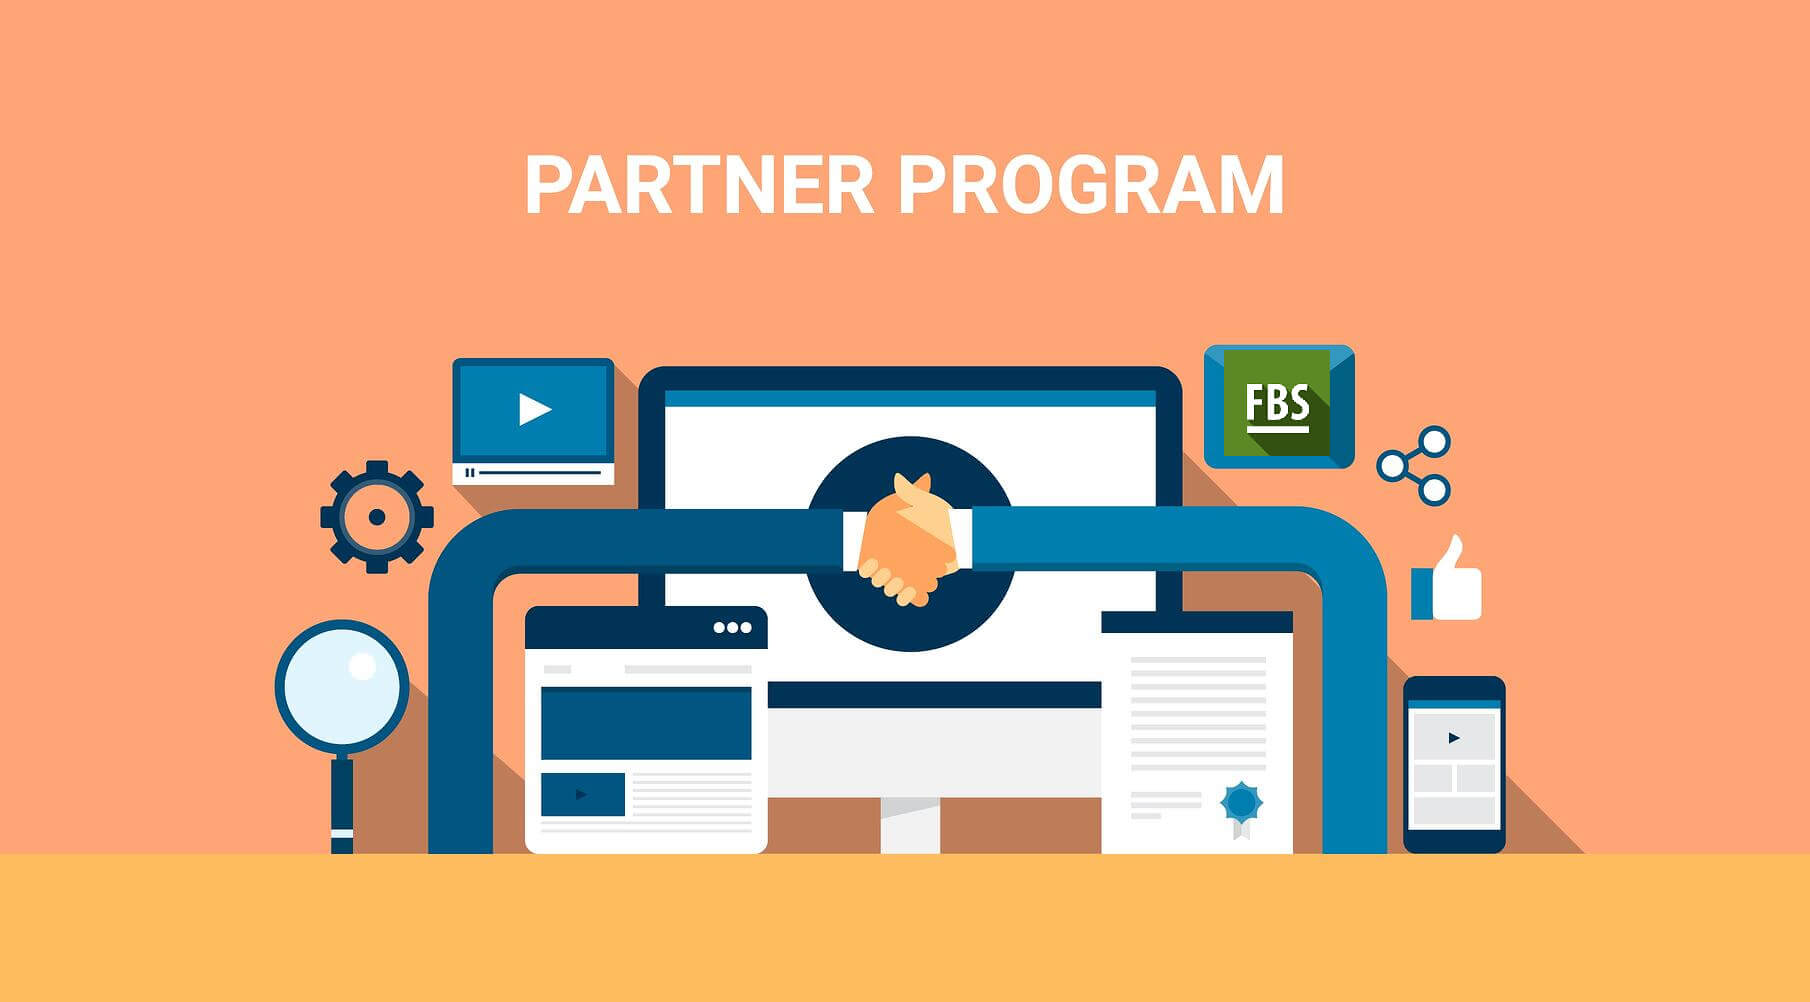 FBS Partnership program - How much does Partner earn - FAQ?